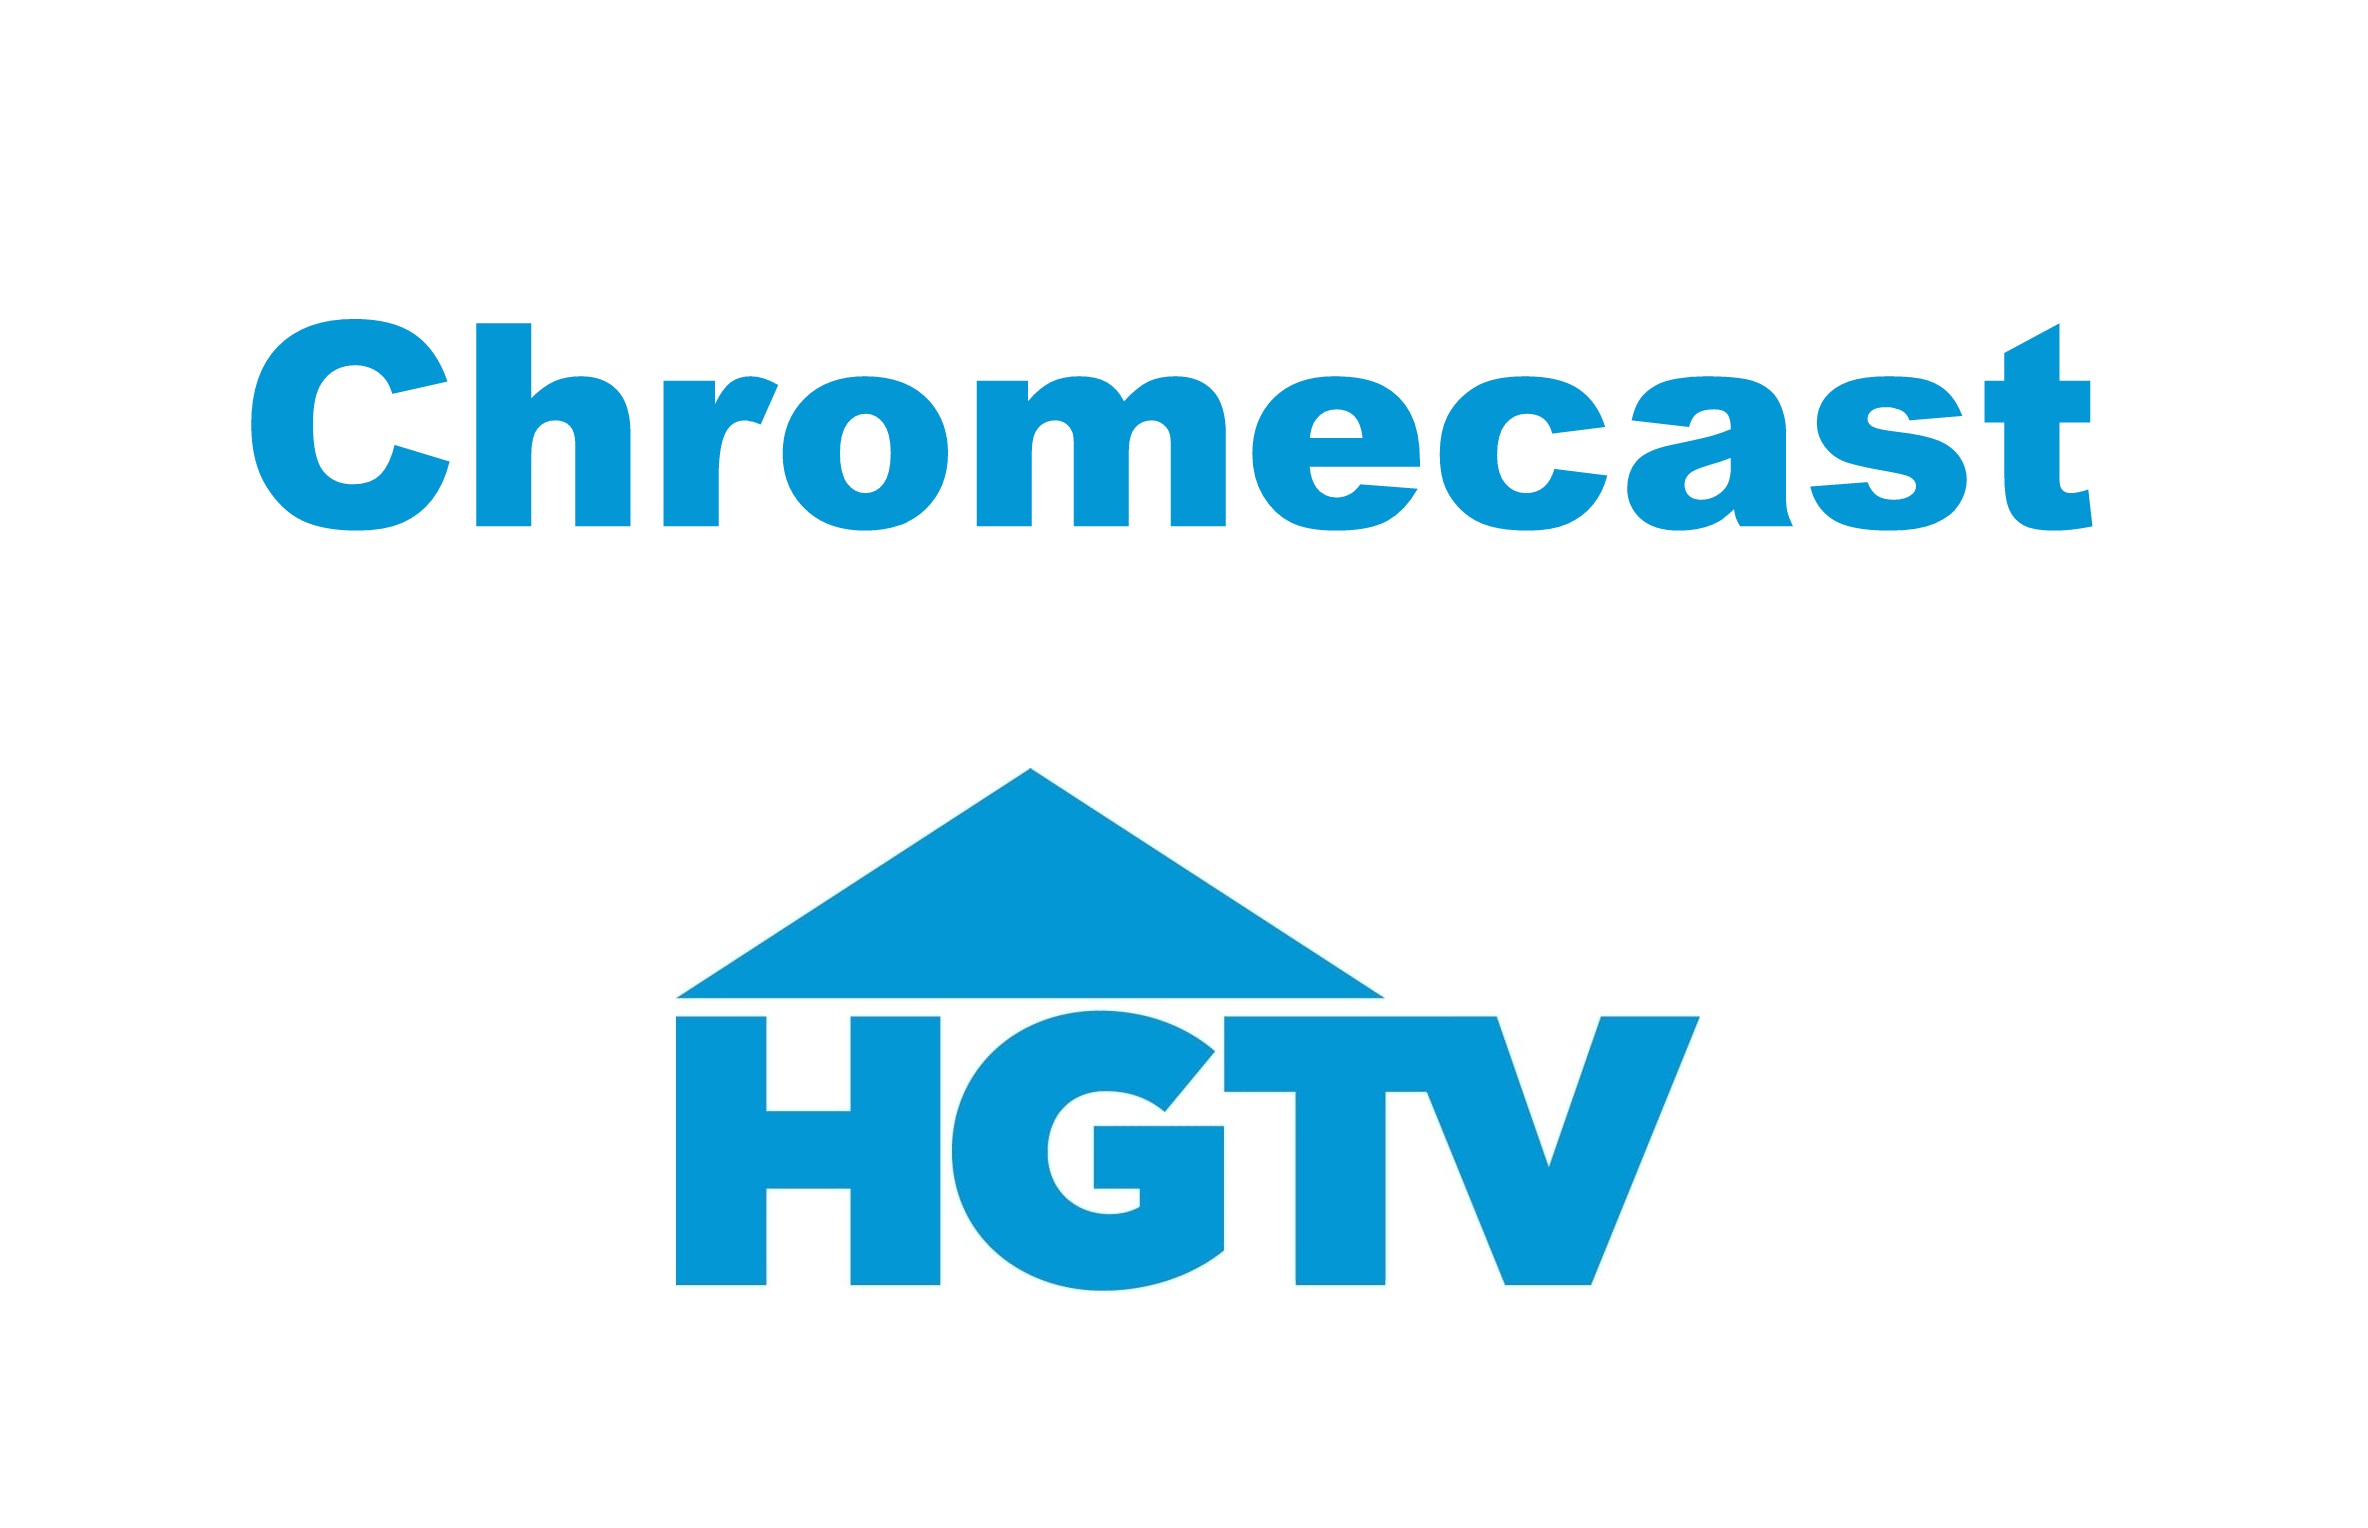 Chromecast HGTV